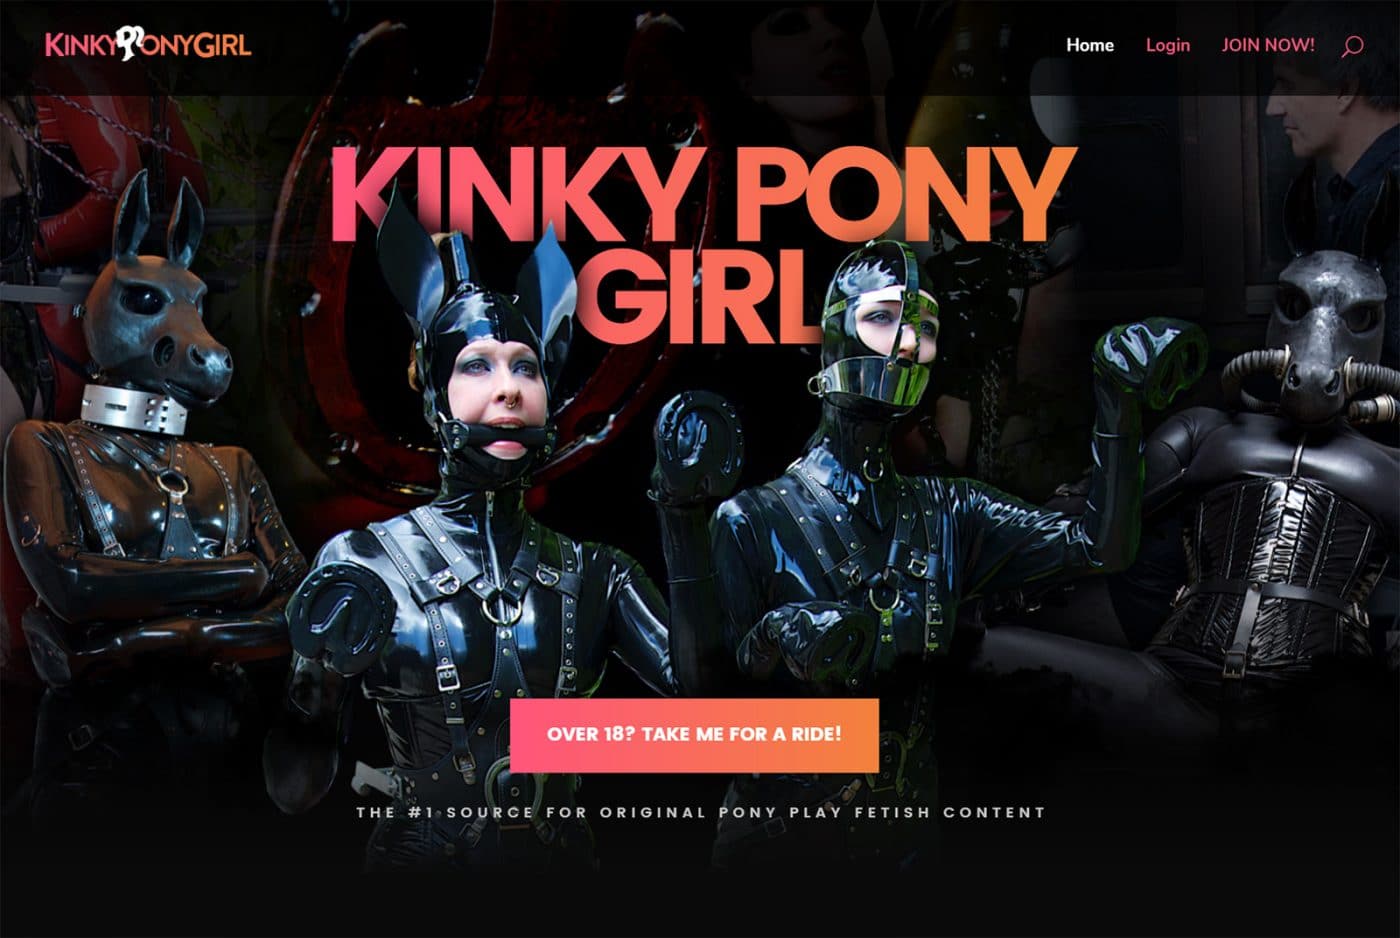 Kinky PonyGirl added to our portfolio